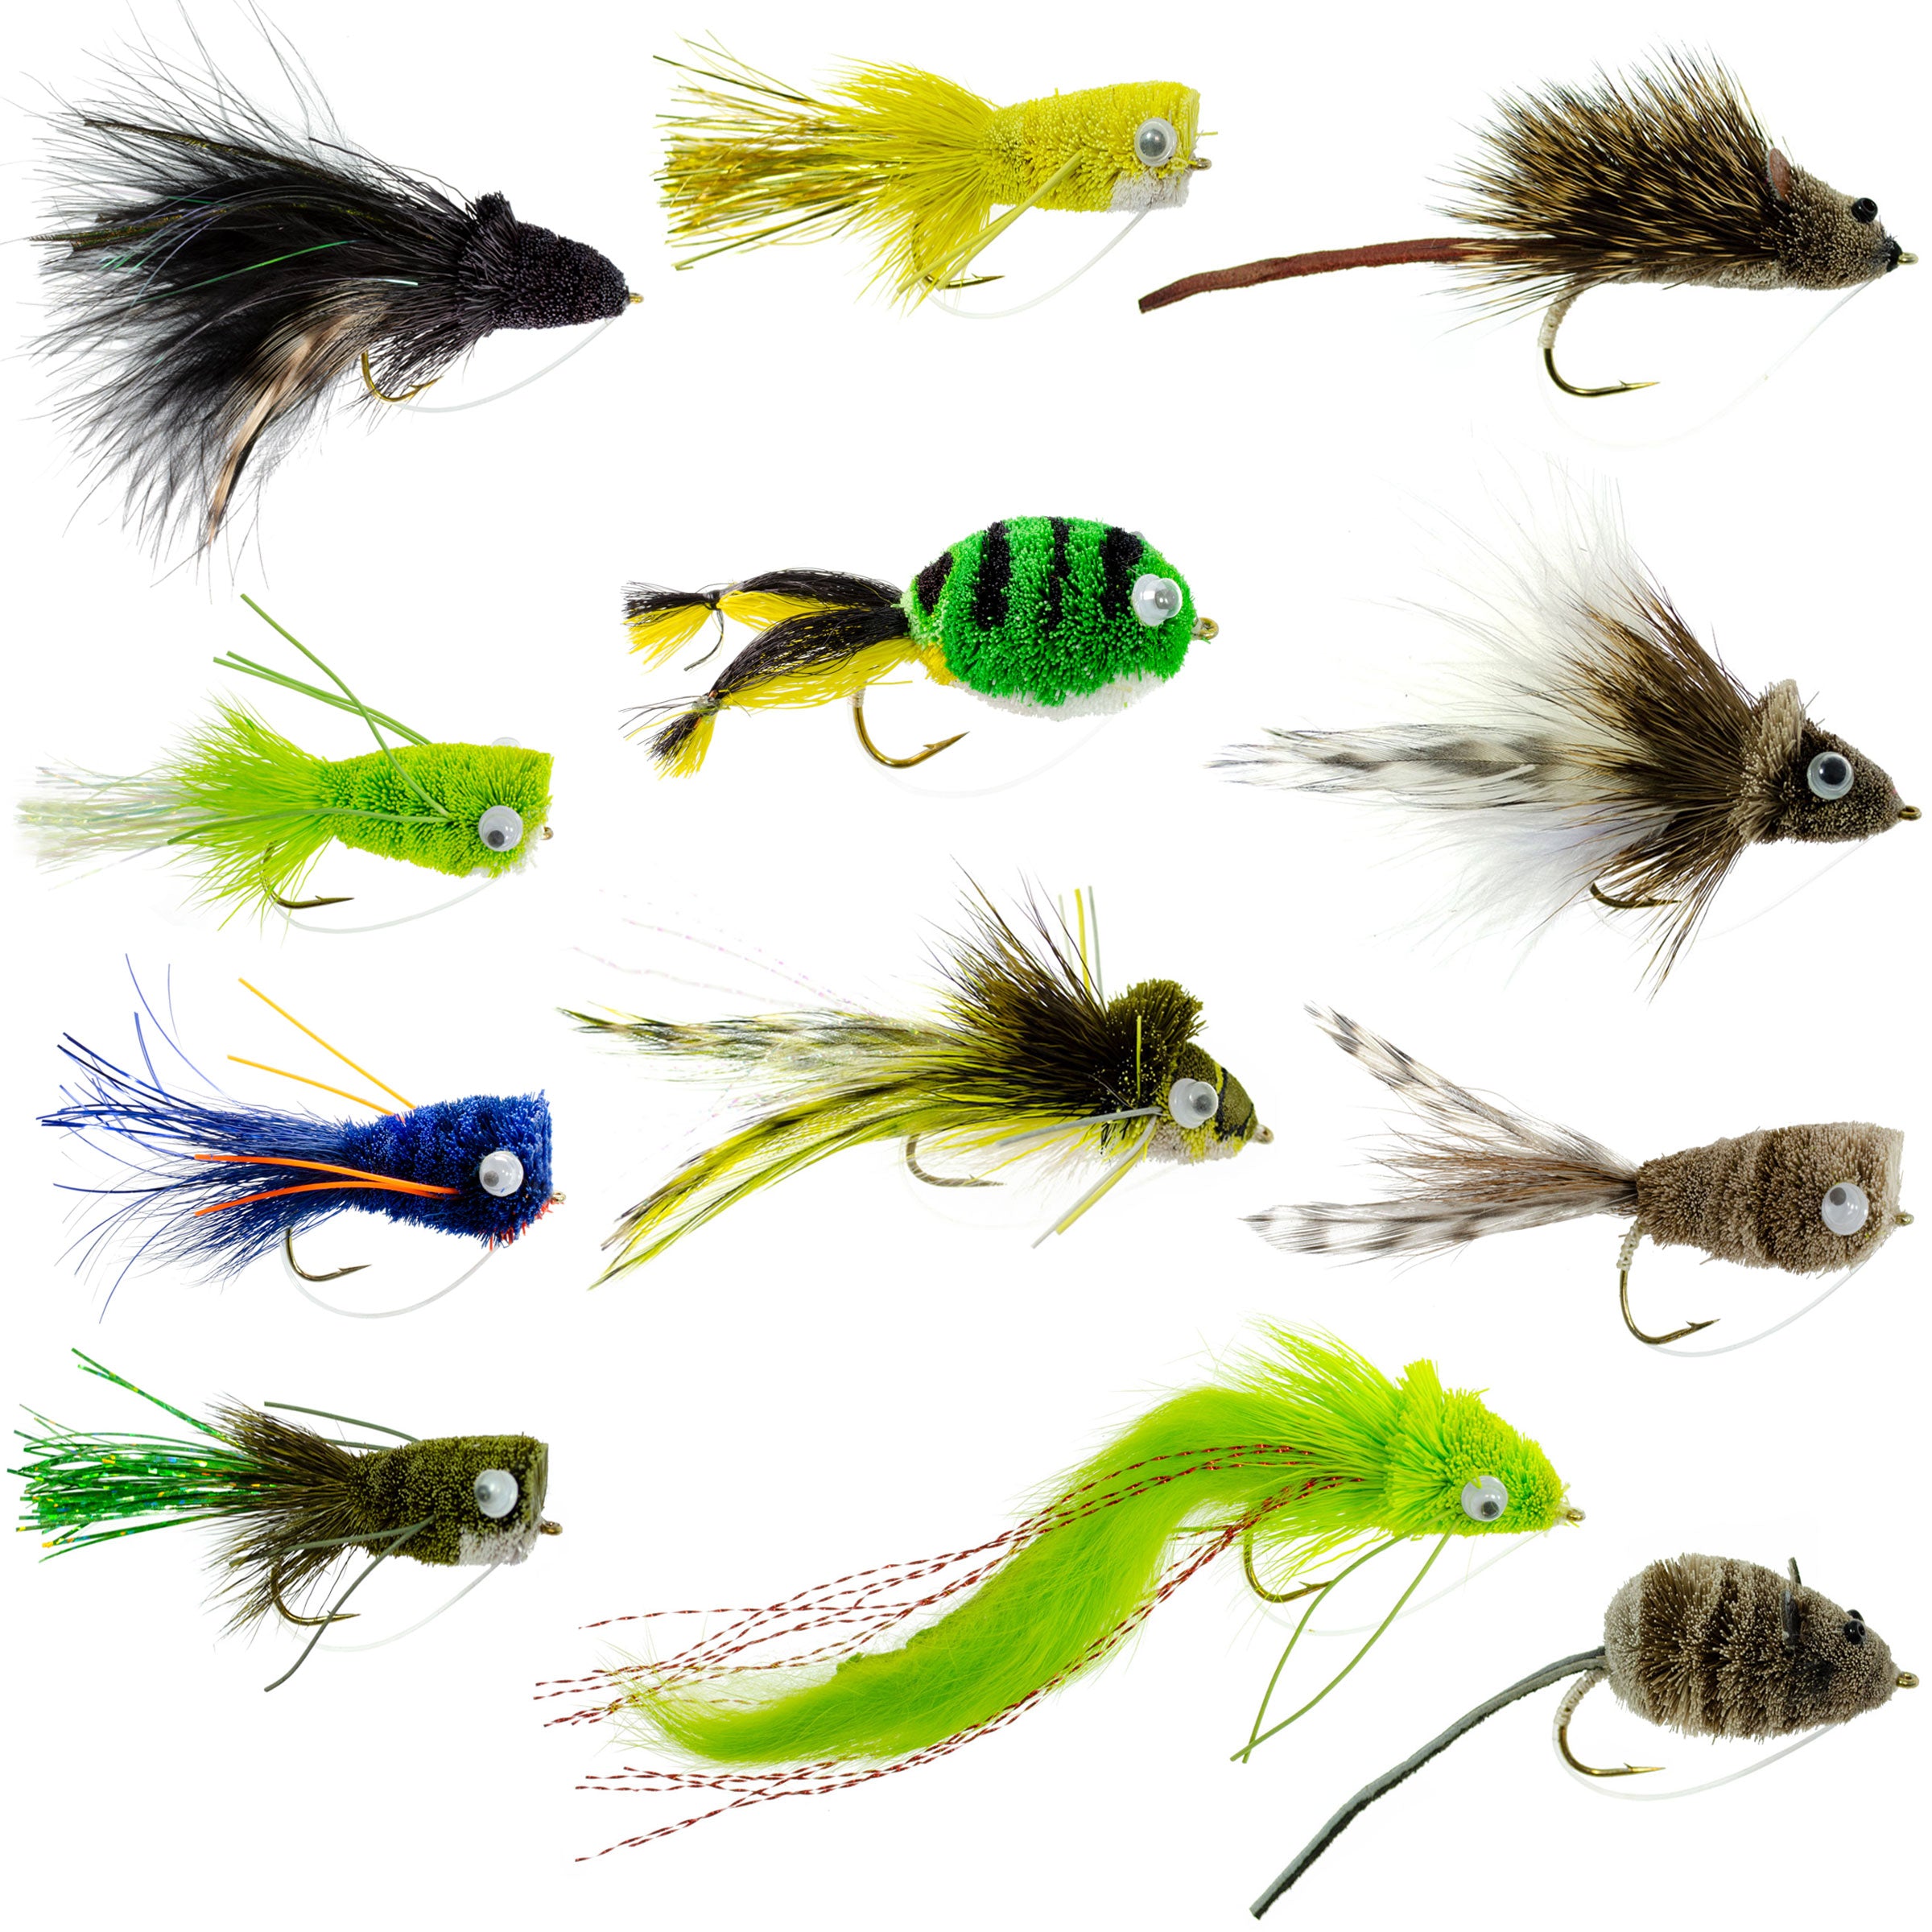 Bass Fly Fishing Flies, Buy Bass Online